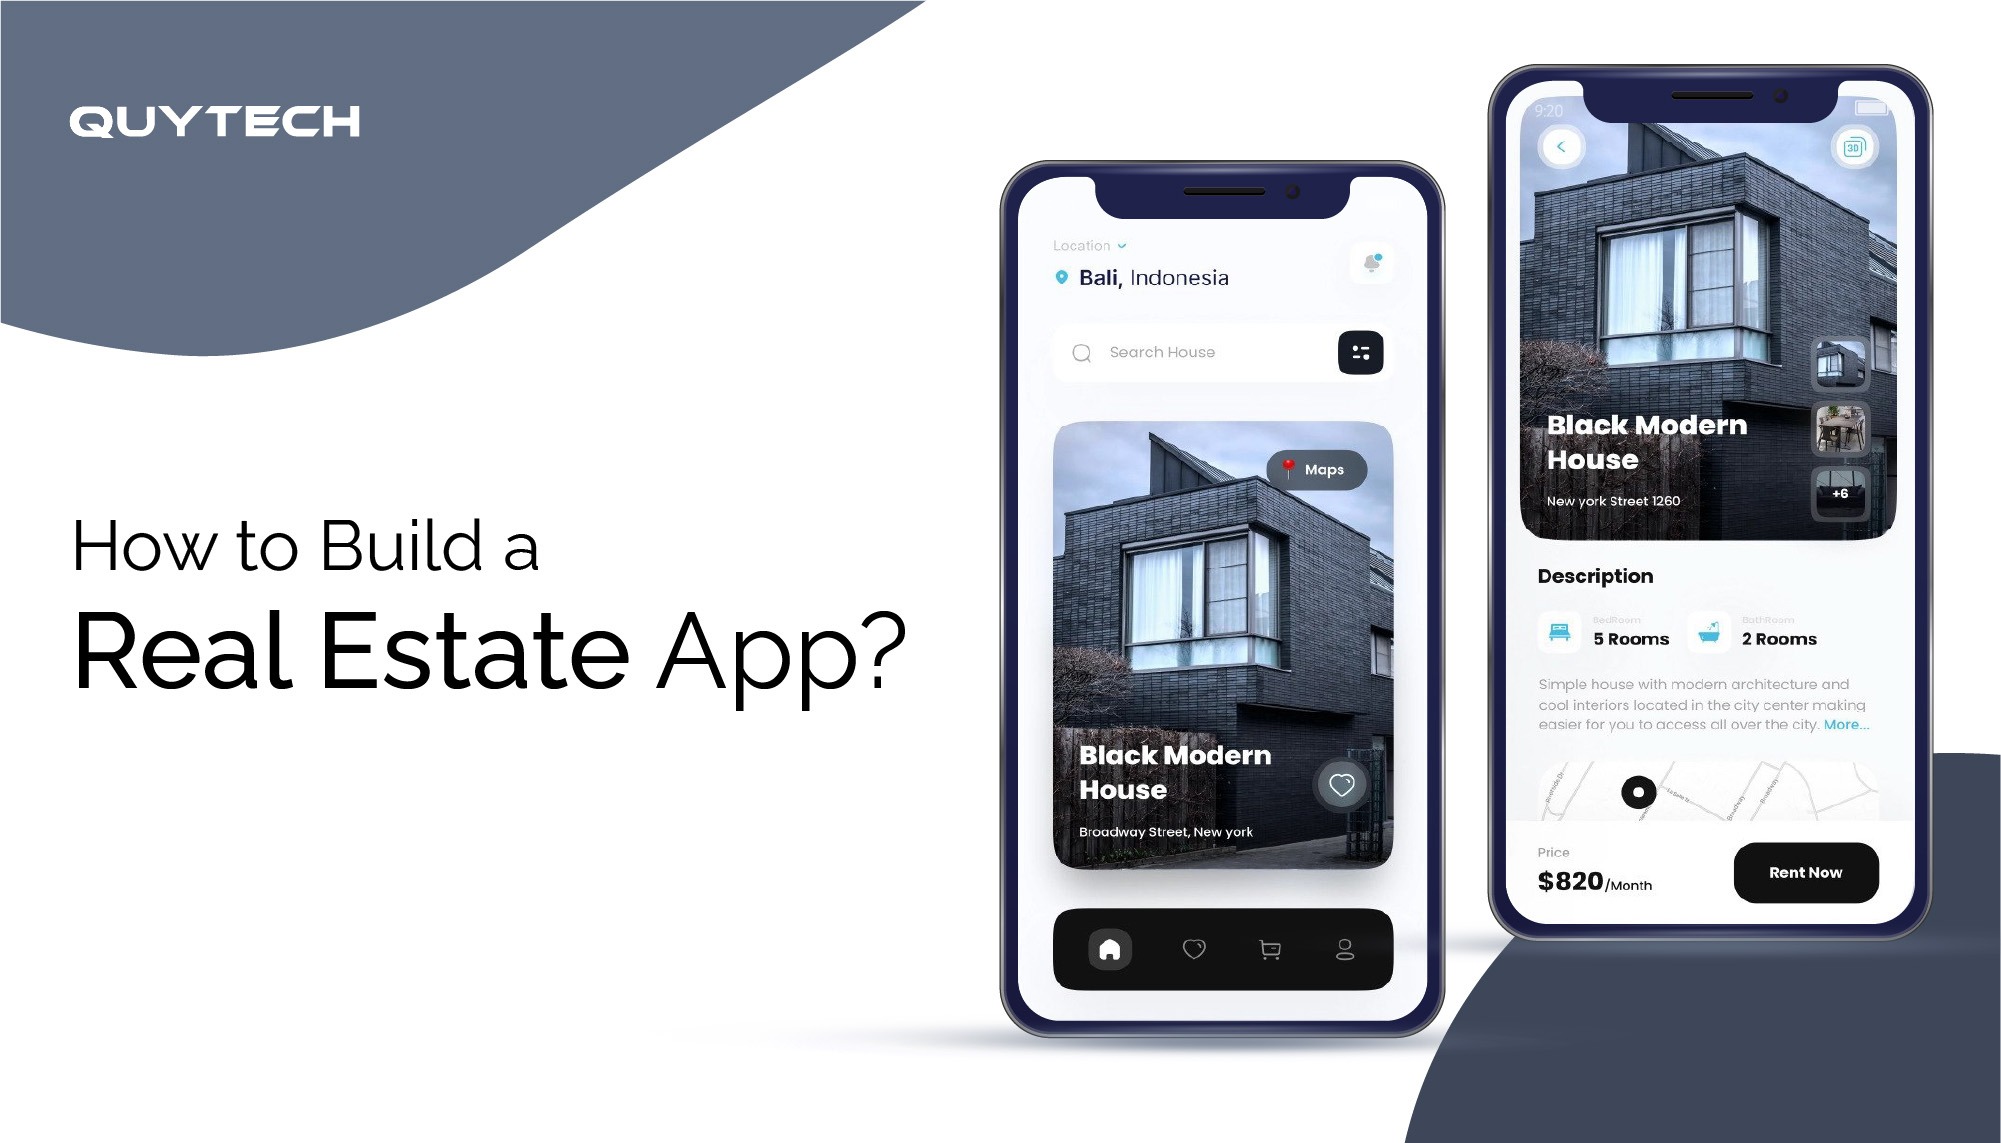 Real Estate Mobile App Development